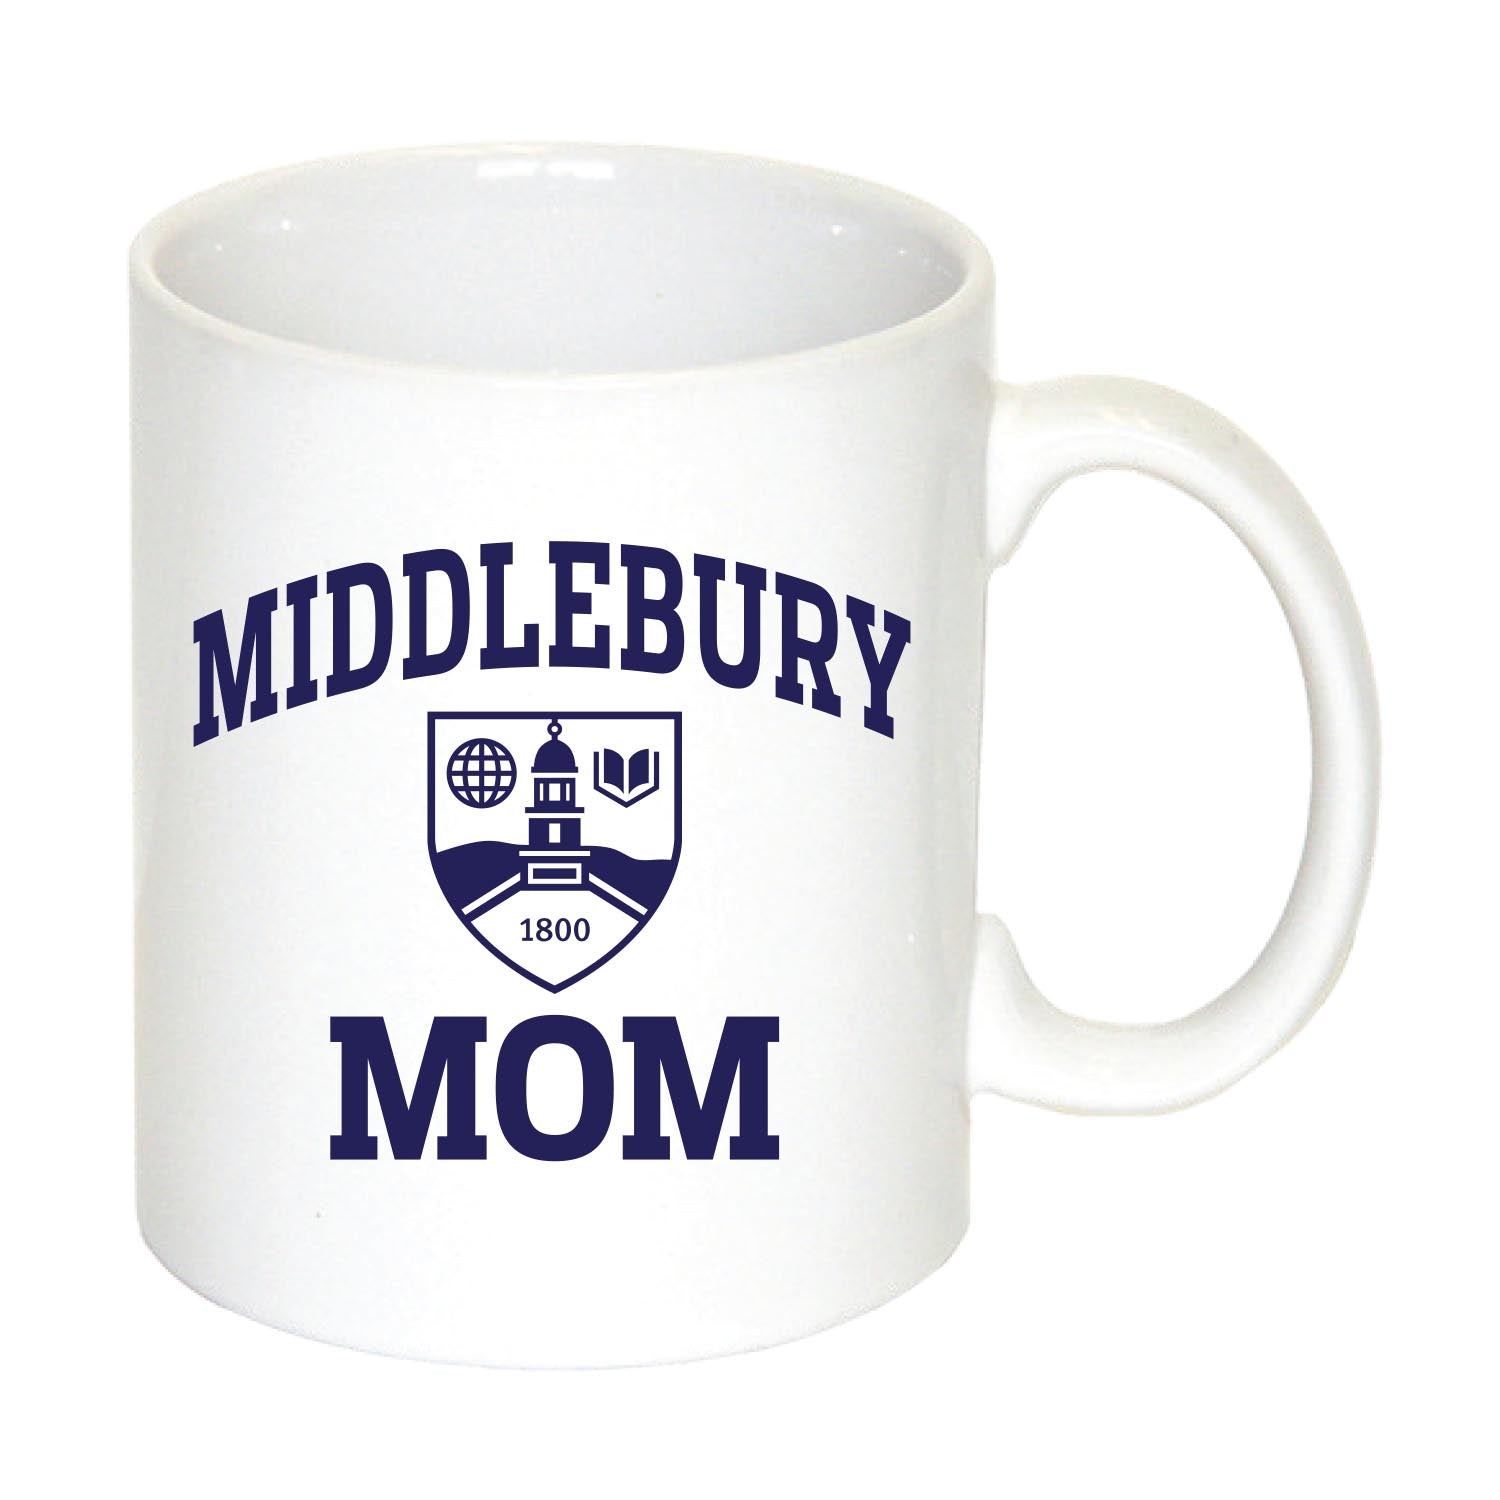 Middlebury MOM Mug